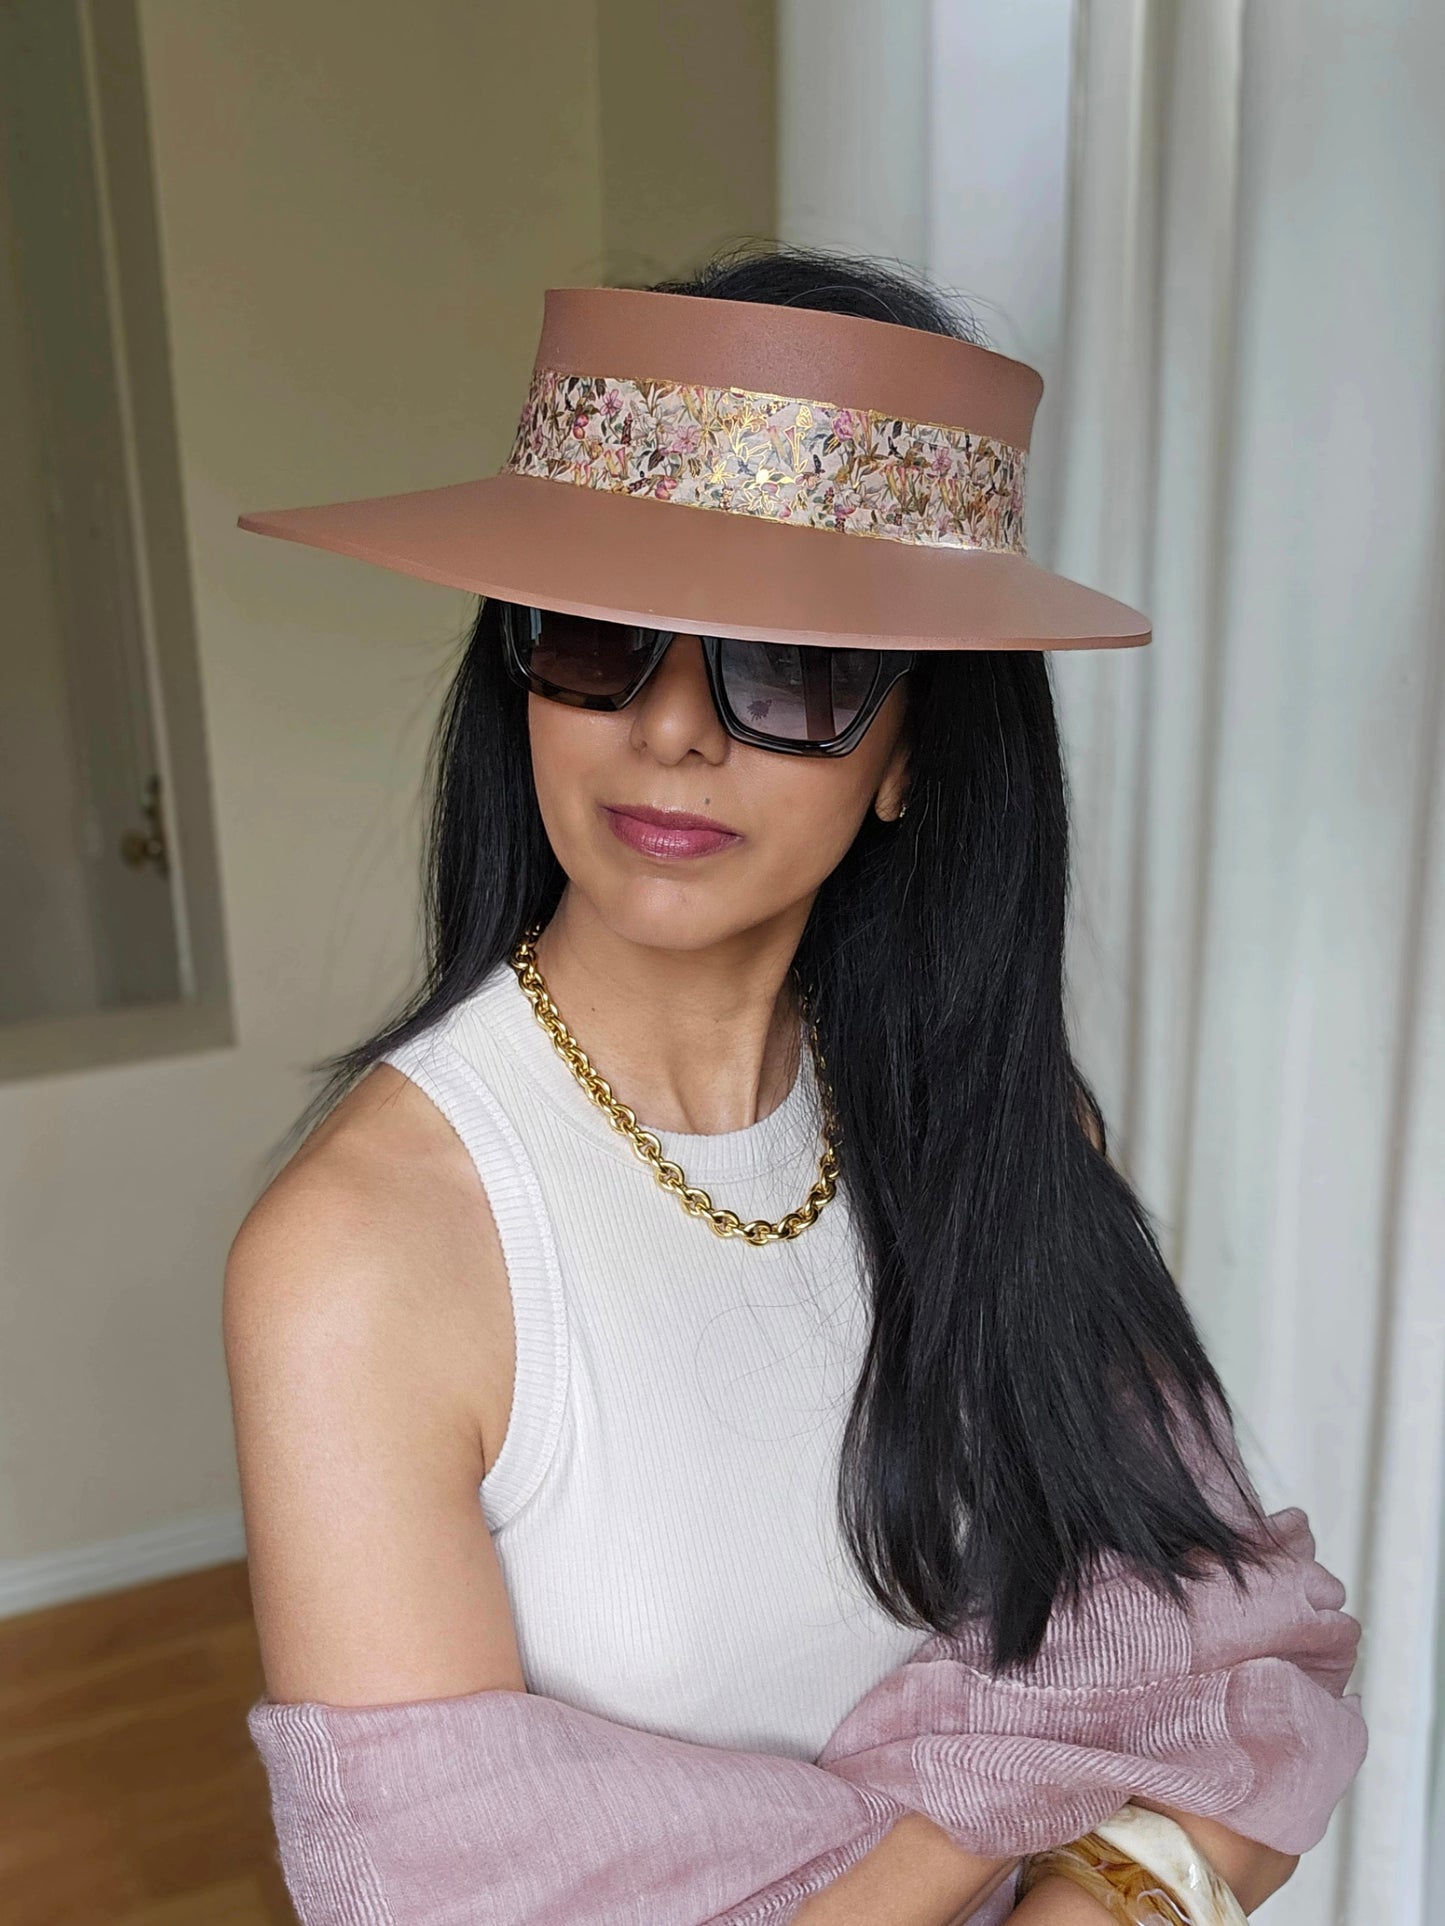 Caramel Brown Audrey Sun Visor Hat with Elegant Pink and Gold Floral Band: UV Resistant, Walks, Brunch, Tea, Golf, Wedding, Church, No Headache, Easter, Pool, Beach, Big Brim